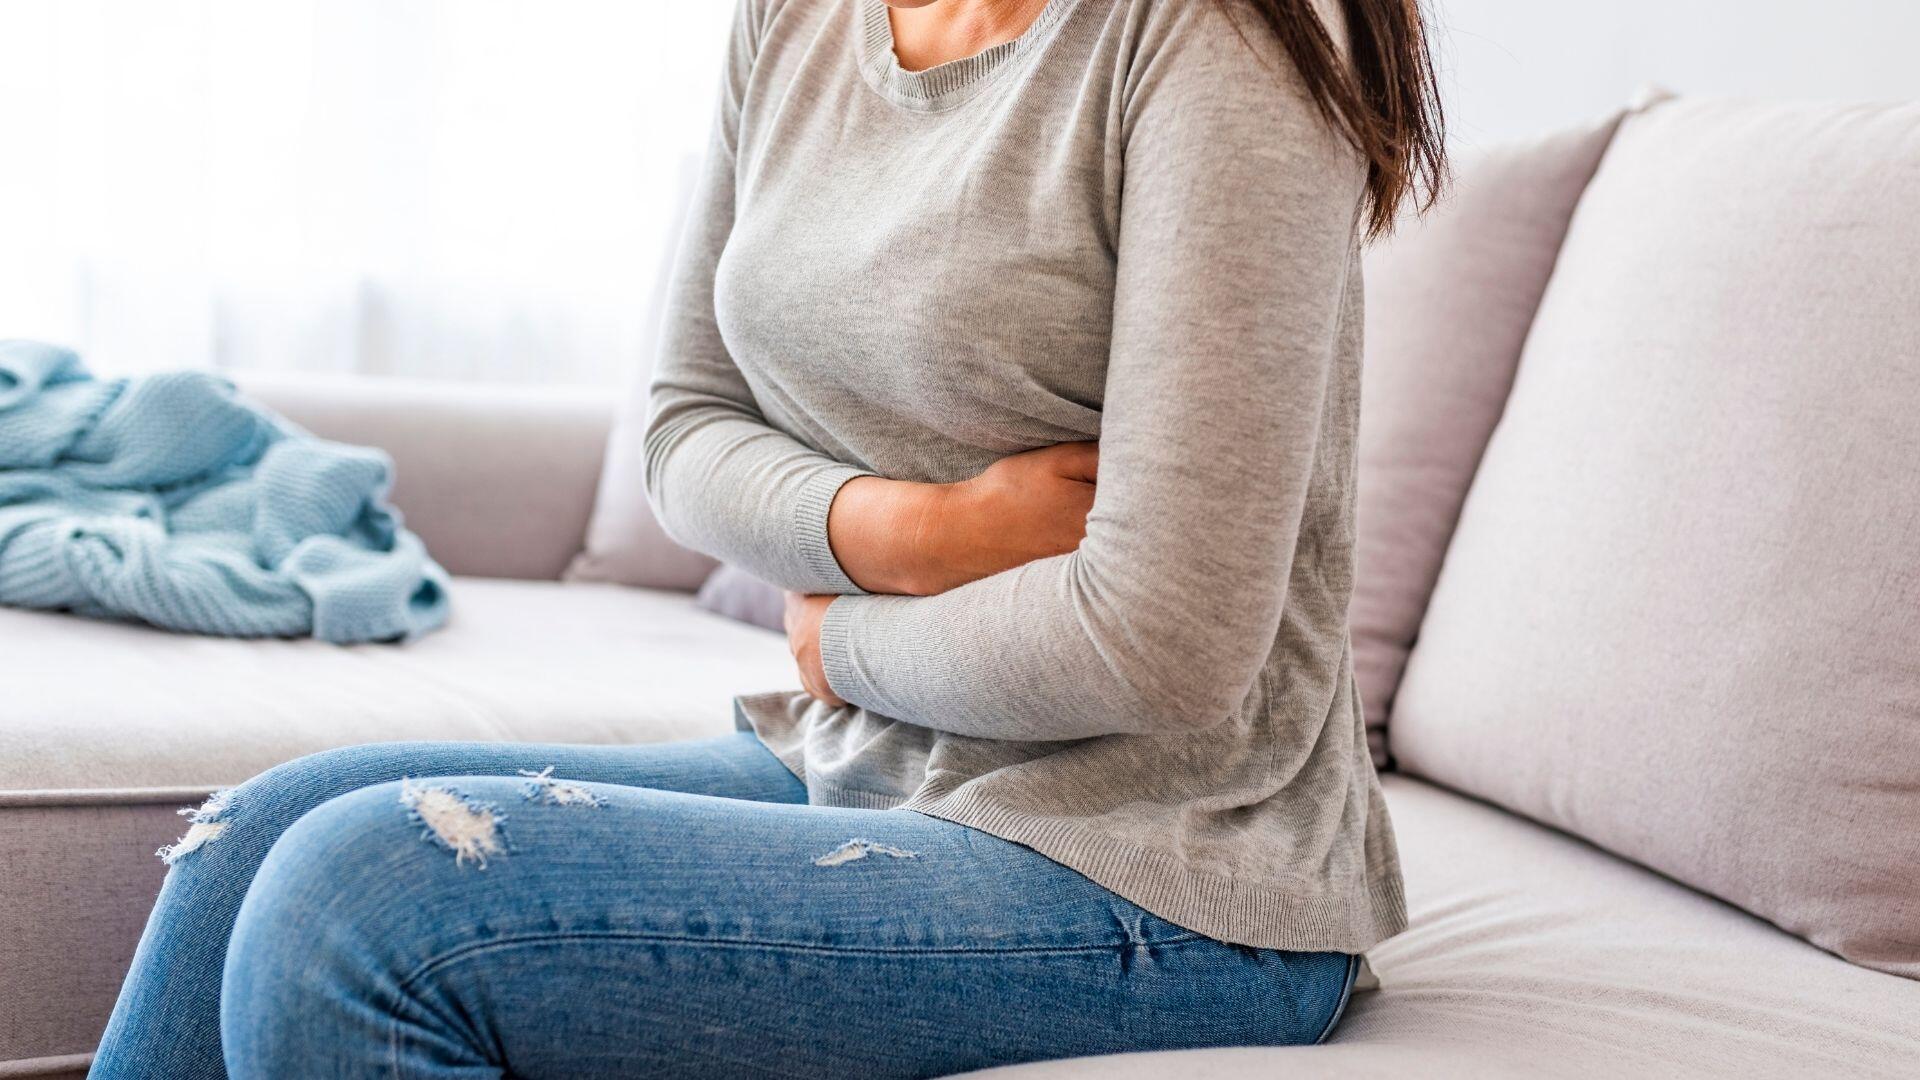 uterine-fibroids-pain-treatment